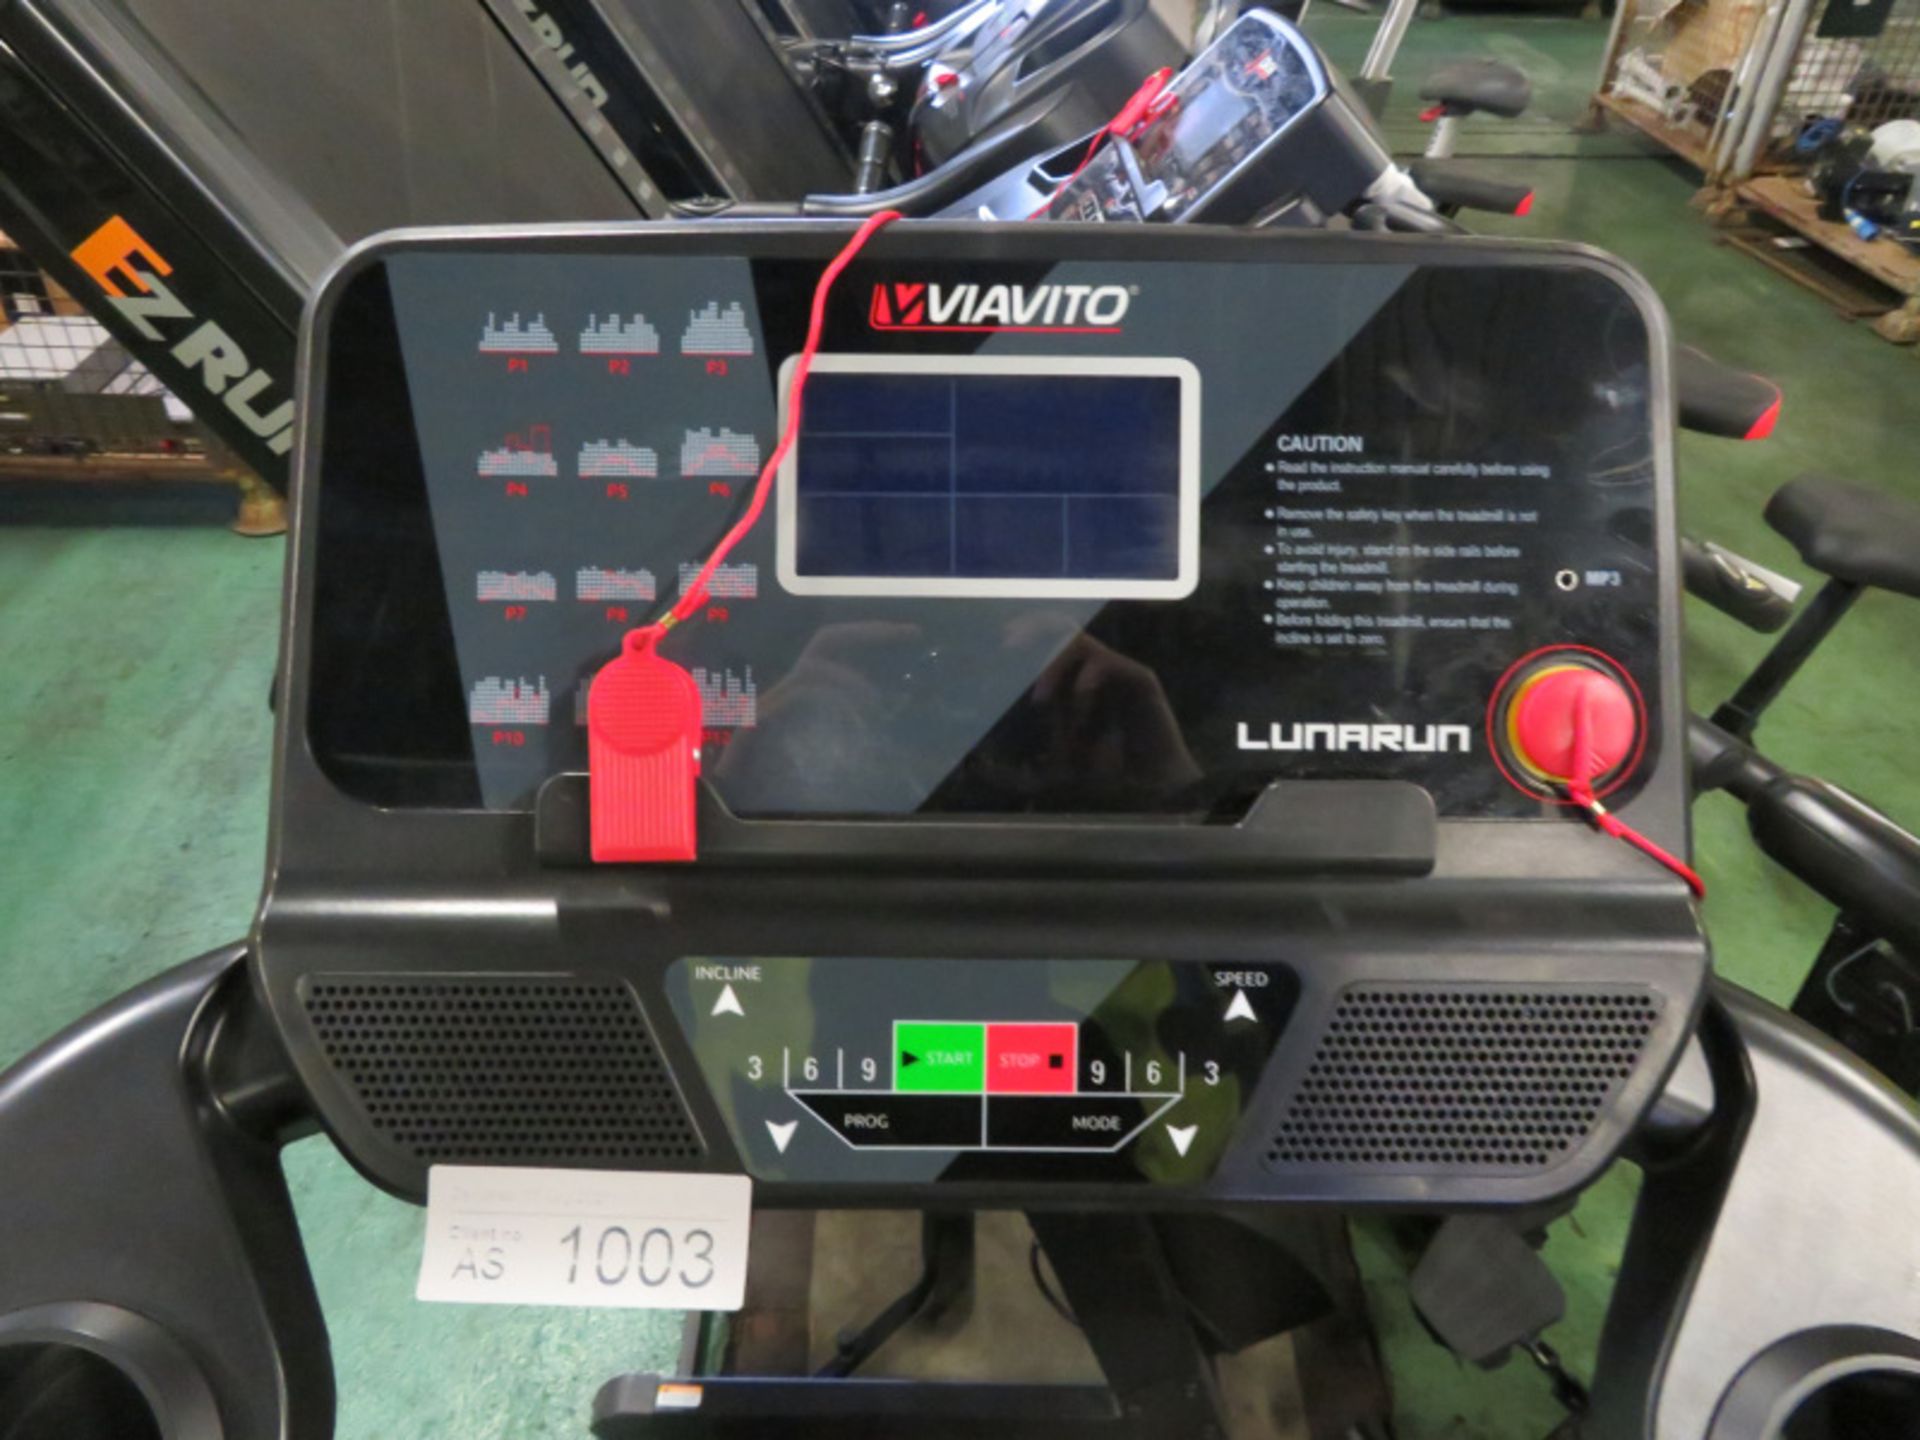 Viavito LunaRun fold up treadmill - Image 4 of 4